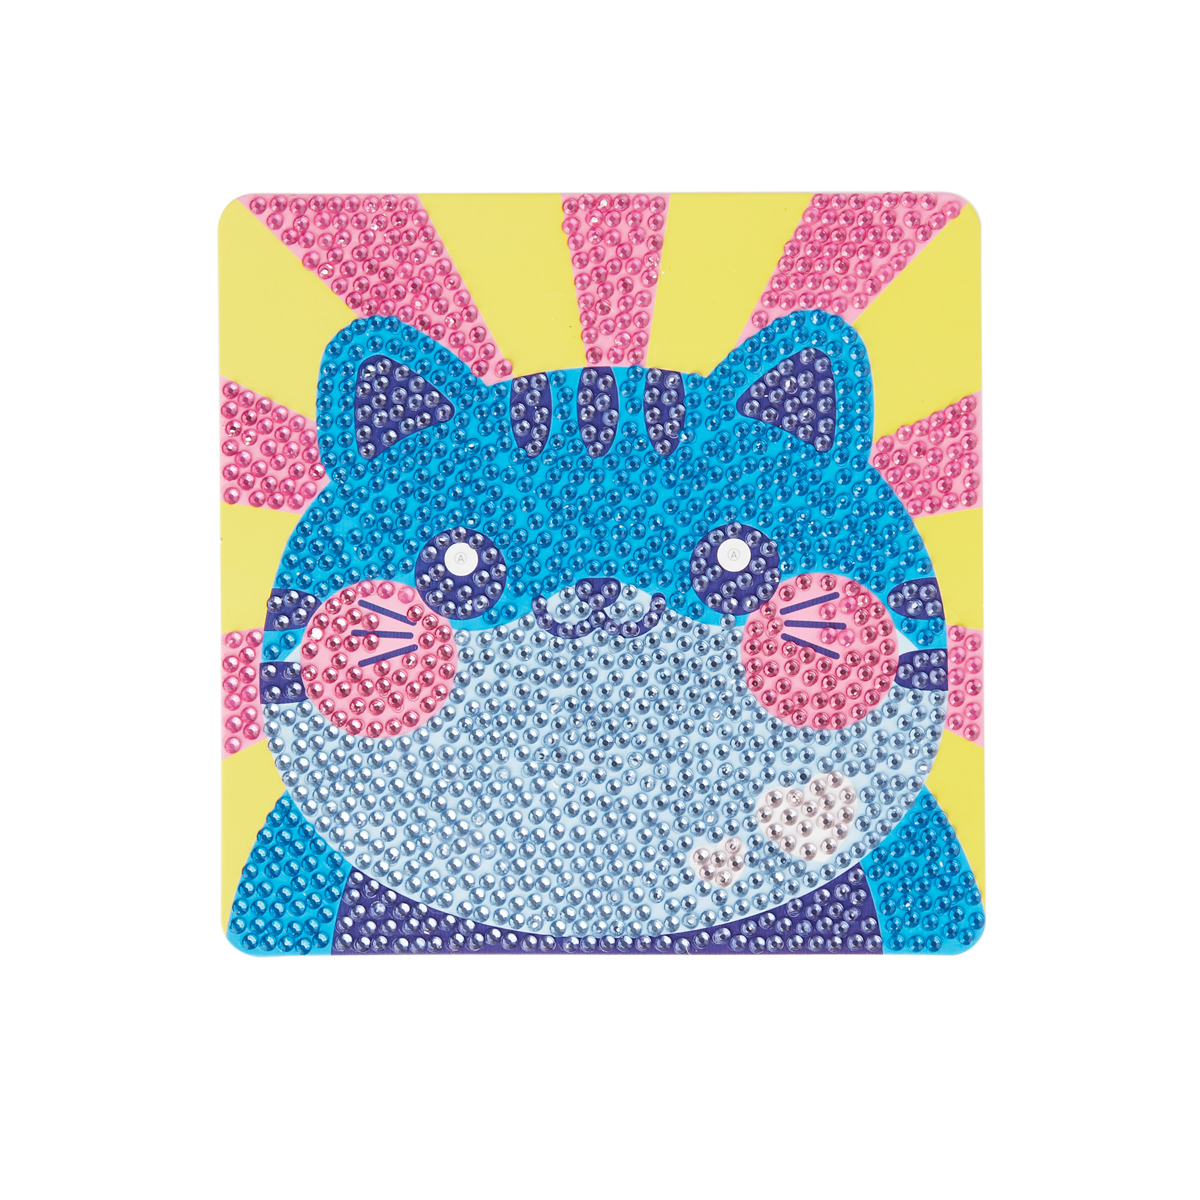 OOLY view of Razzle Dazzle DIY Gem Art Kit - Cutesy Cat in use